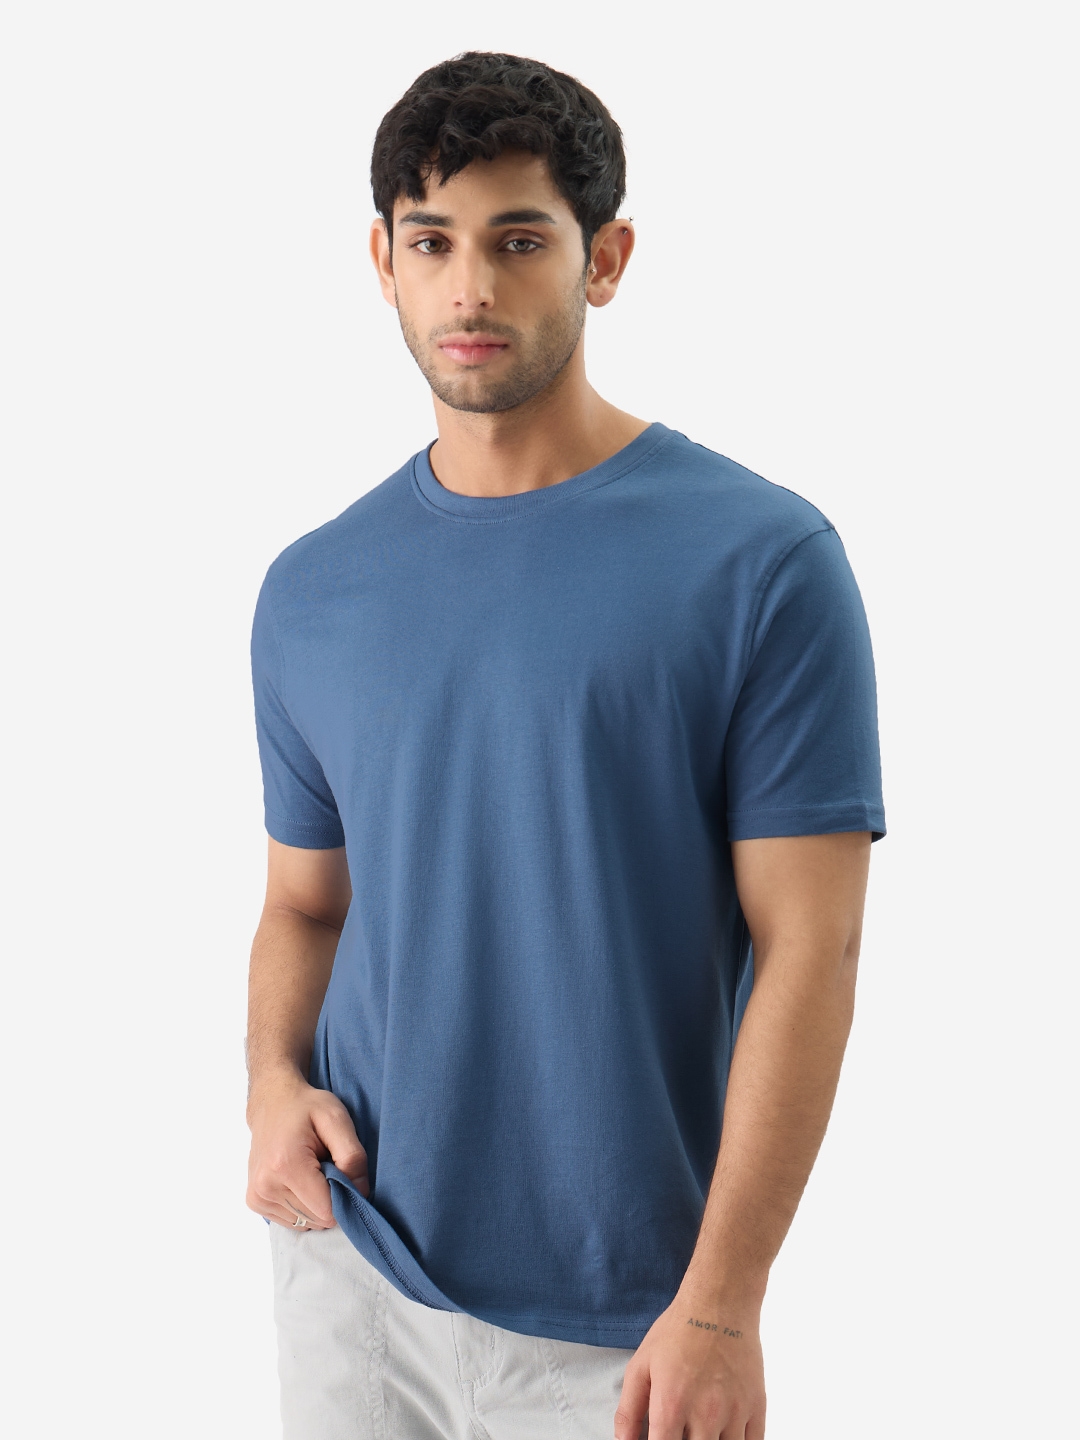 Men's Classic Sustainable Tee: Indigo Bliss T-Shirt